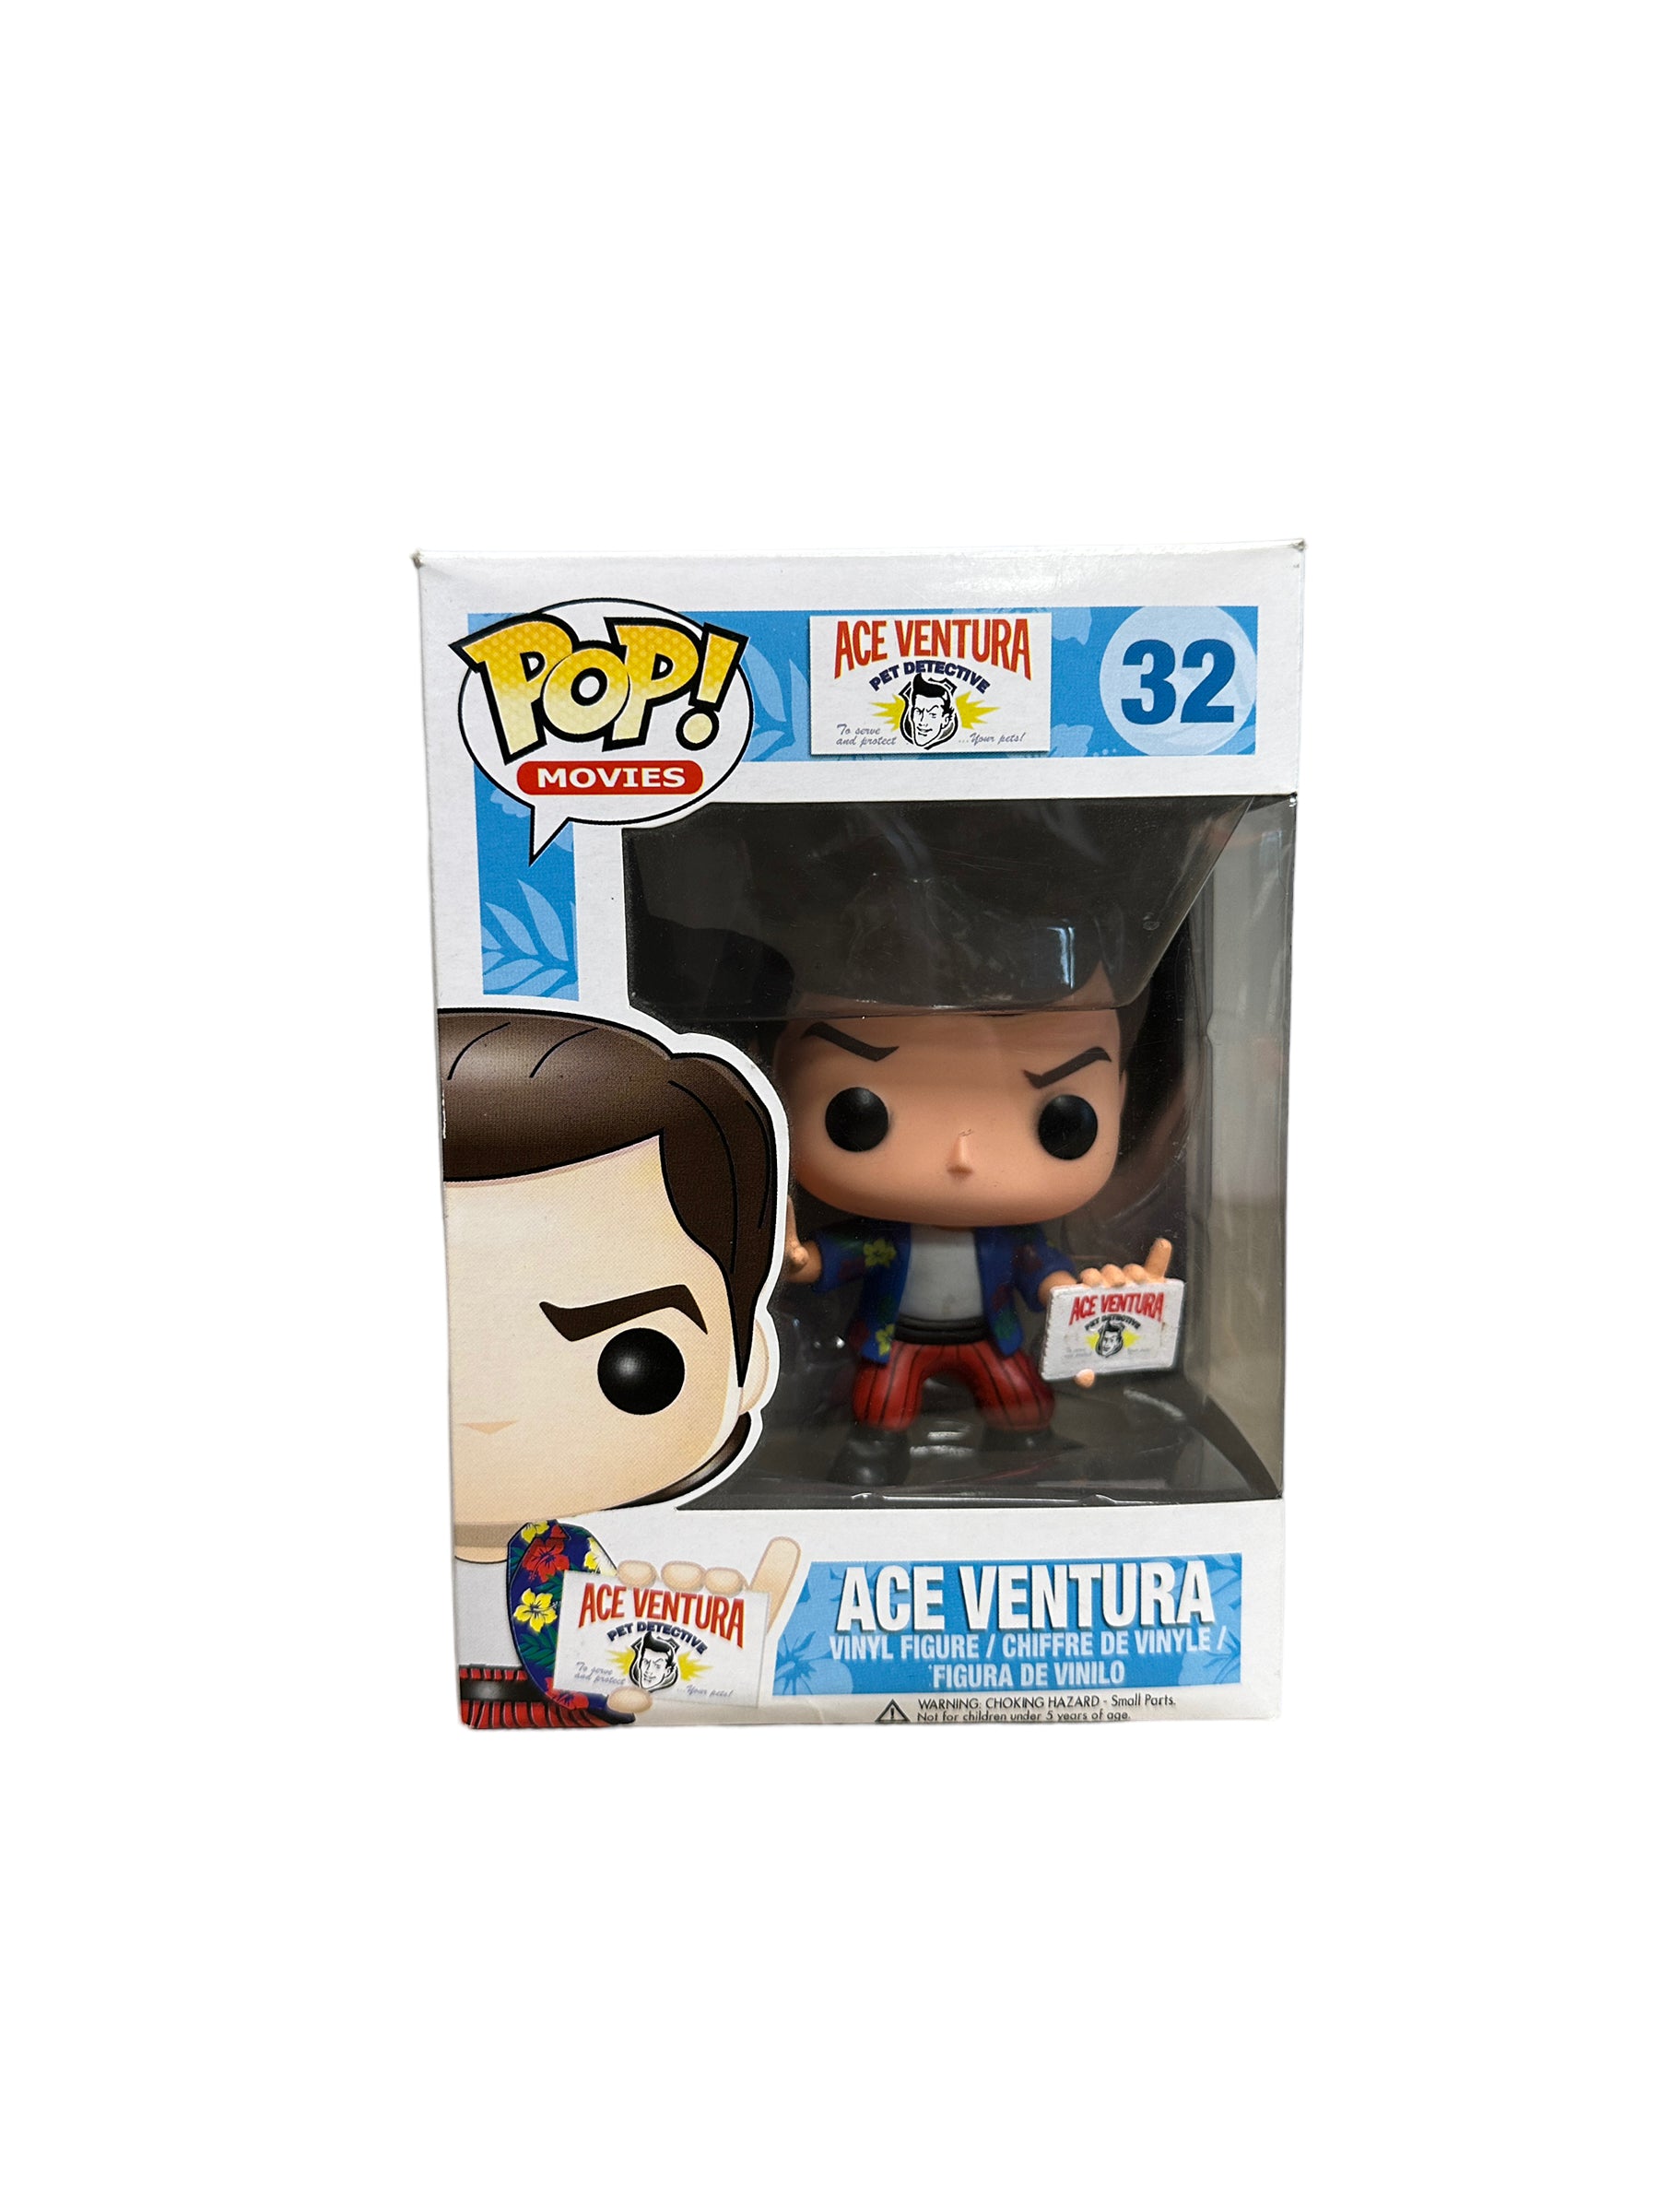 Ace Ventura #32 Funko Pop! - Ace Ventura Pet Detective - 2013 Pop! - Condition 6.5/10